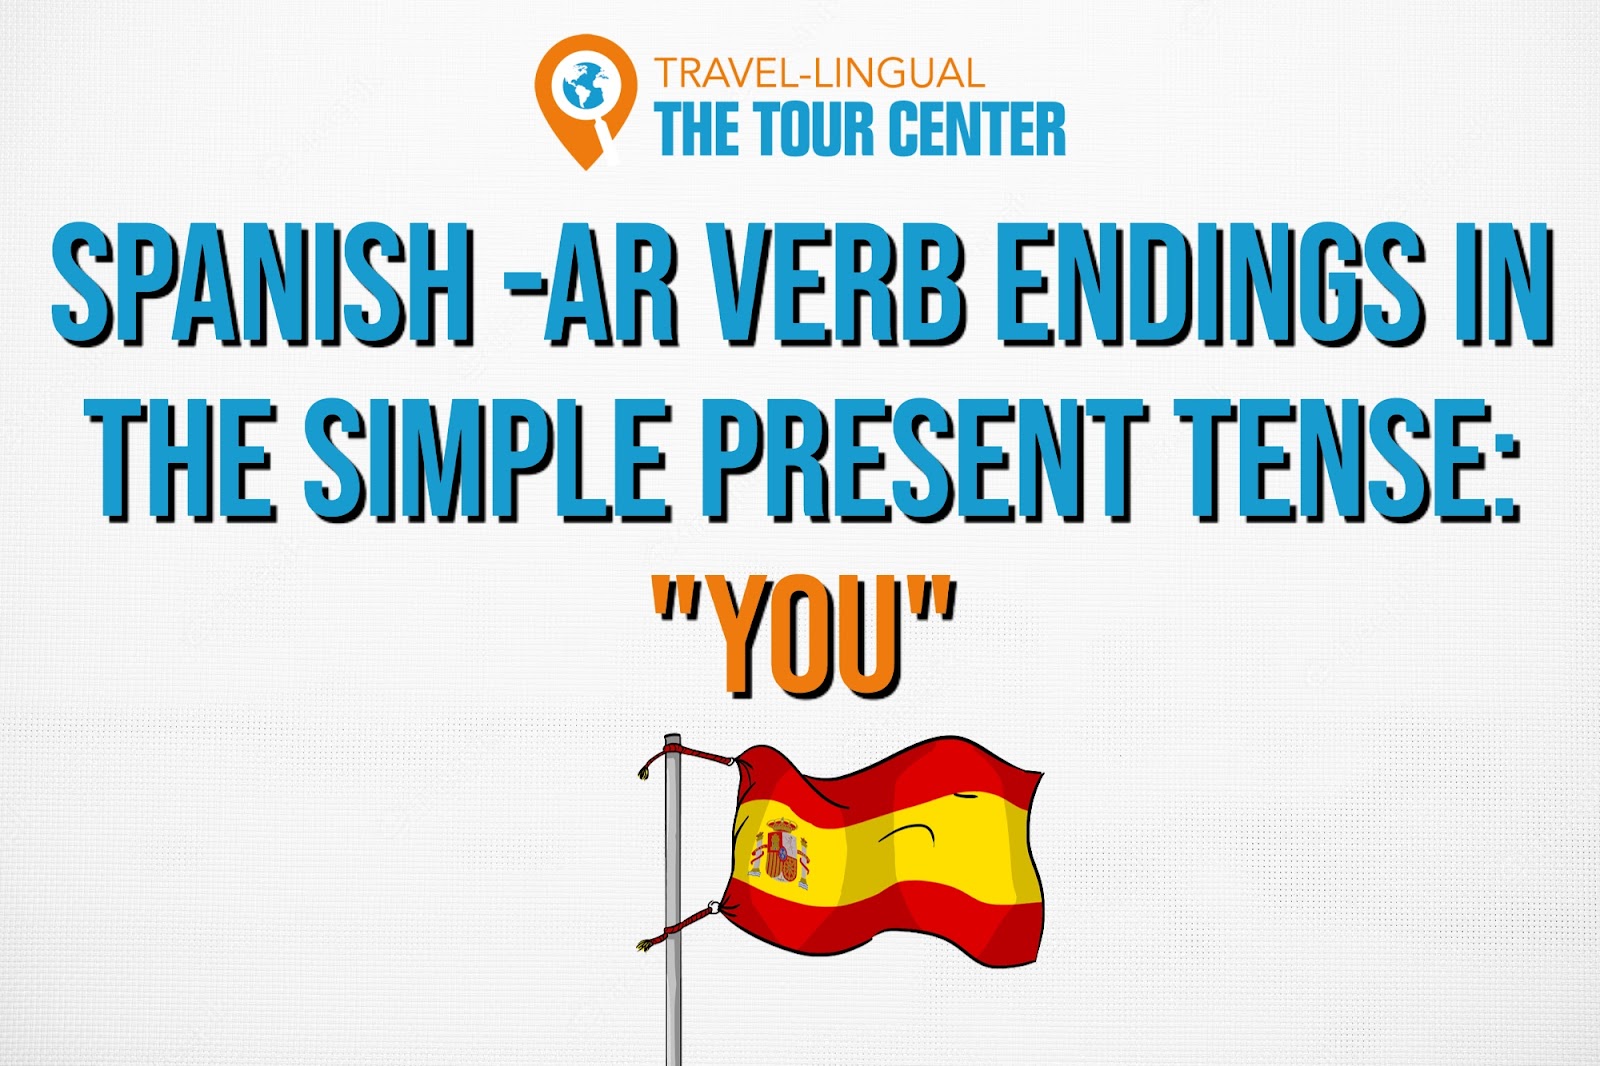 spanish-ar verb endings in the simple present tense